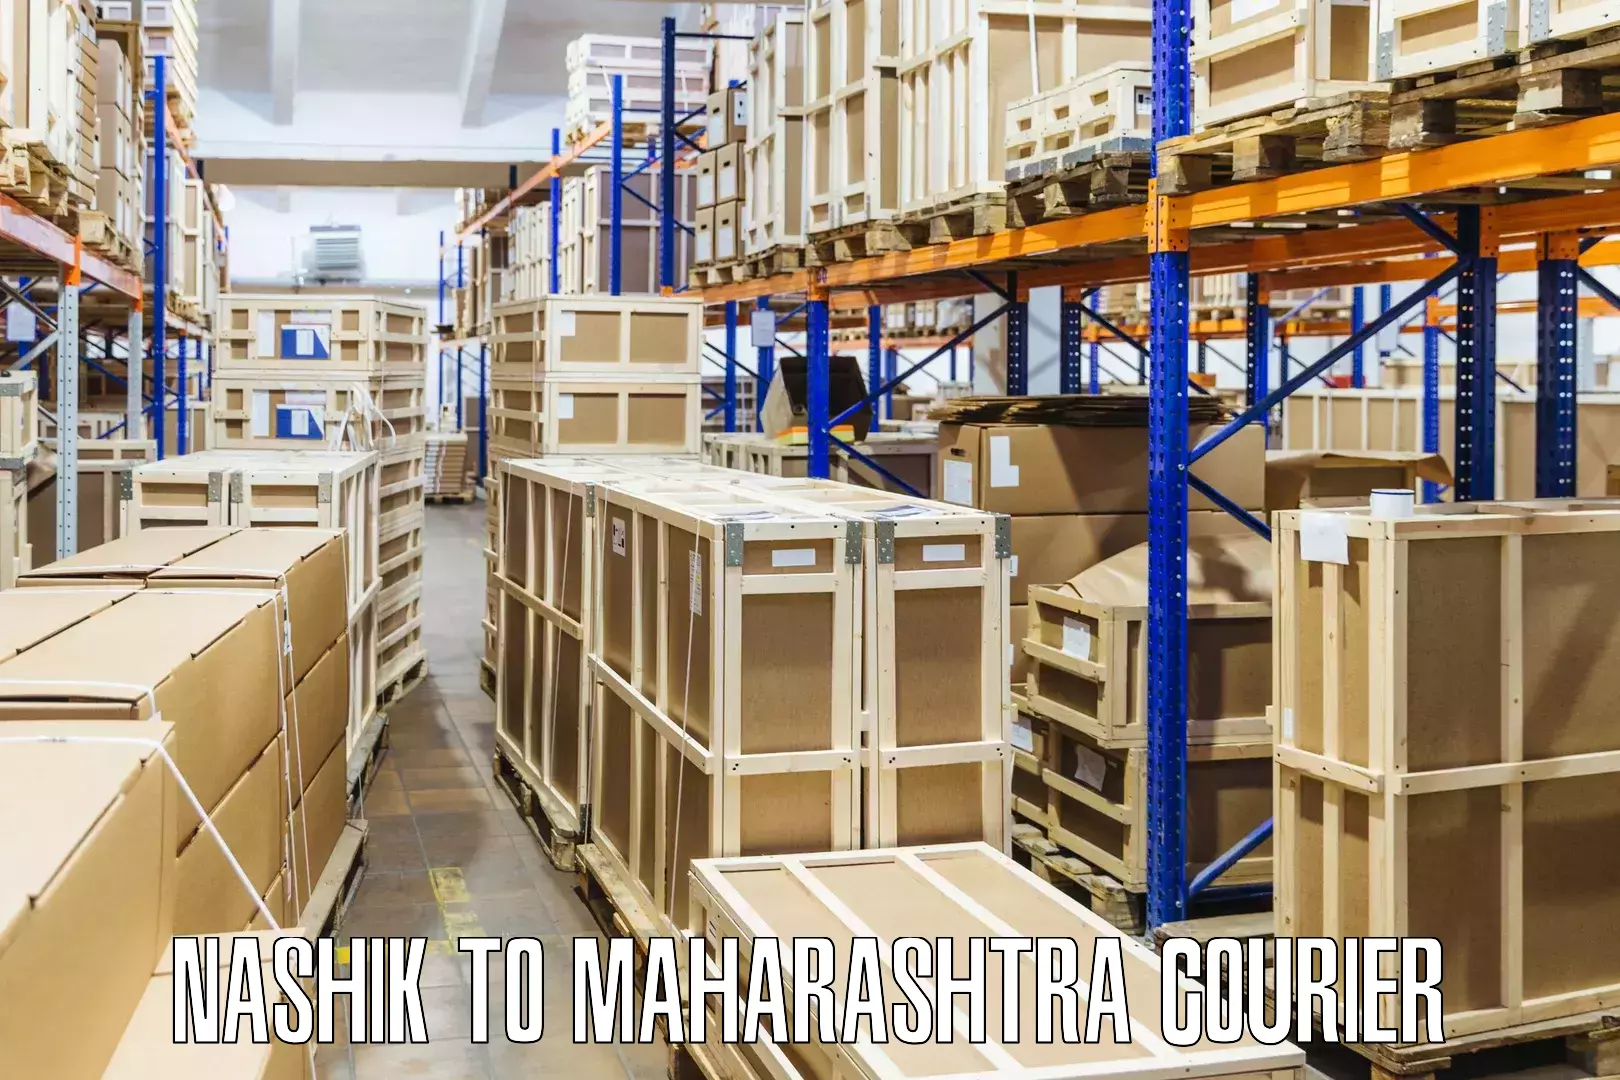 Courier tracking online Nashik to Nagothane